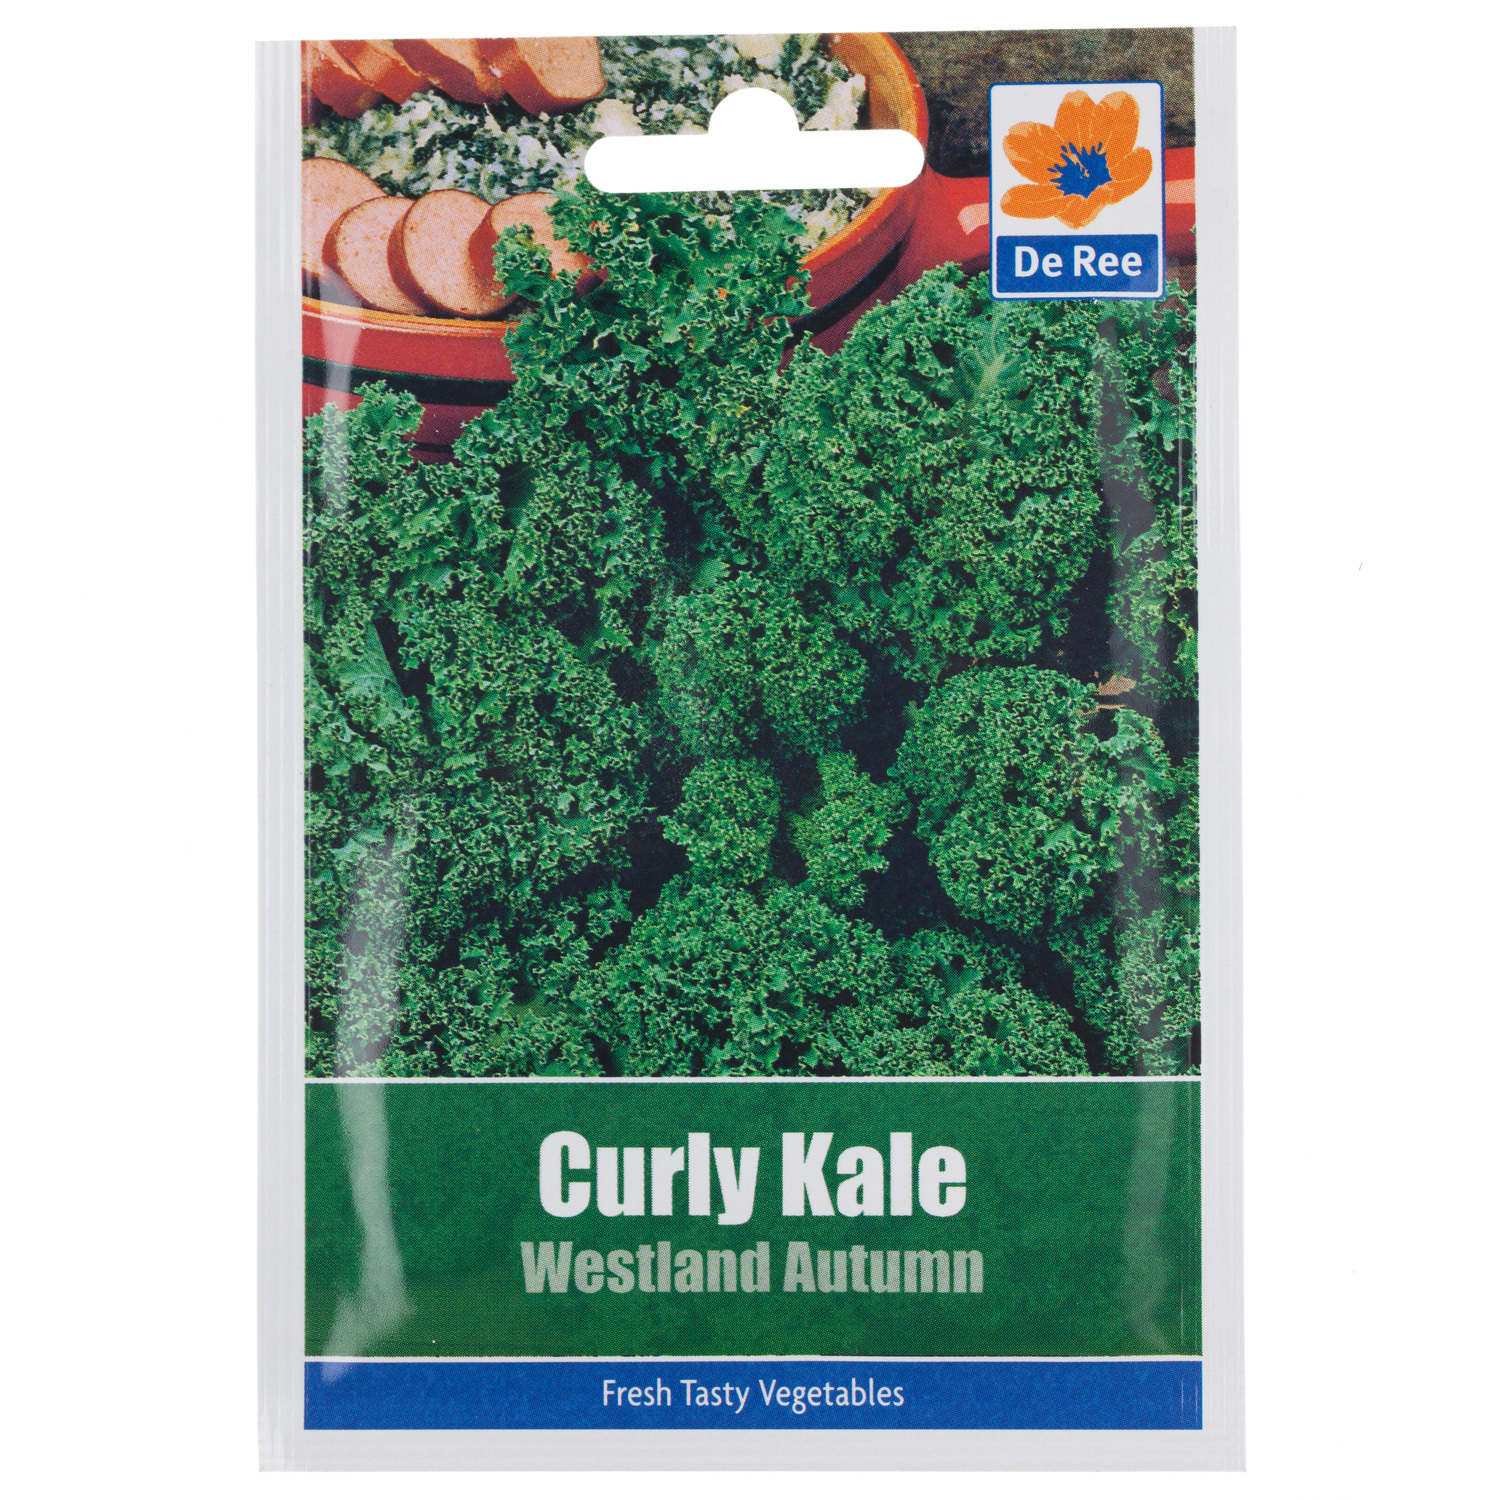 Curly Kale Westland Autumn Seed Packet Image